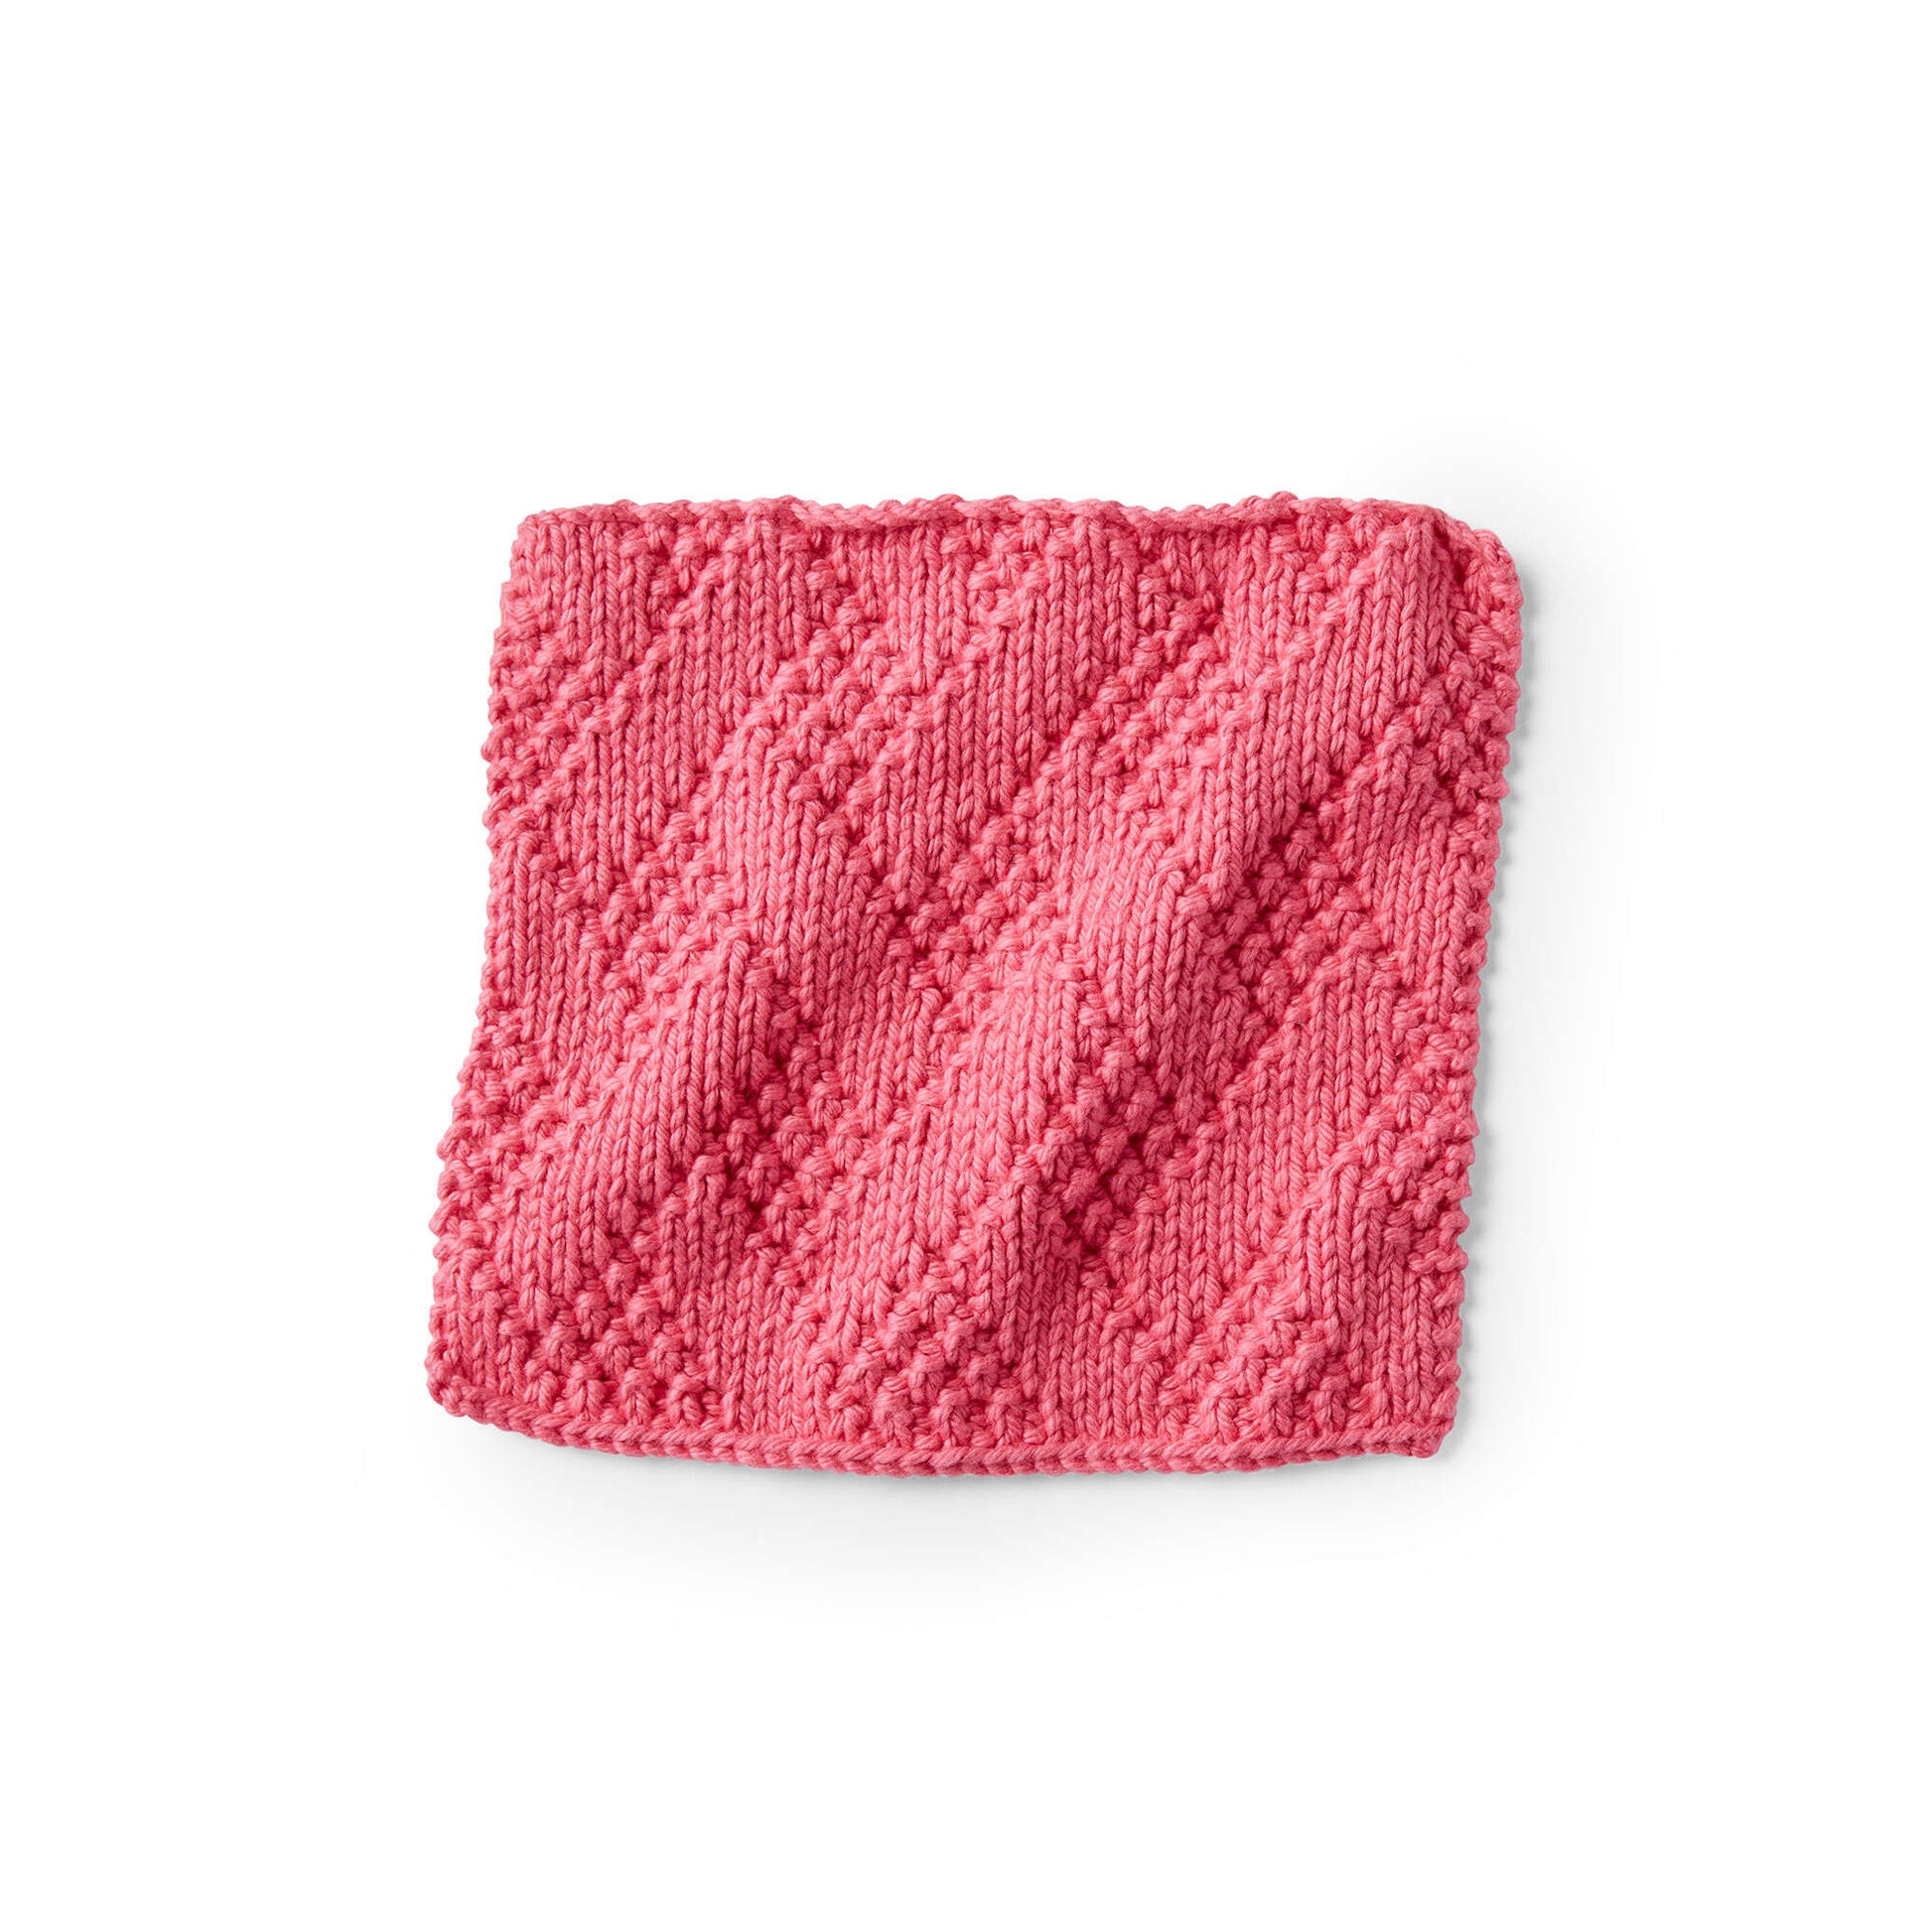 8 pc 100% Cotton XL Kitchen Towel/Dish Cloths, Chevron Pattern by Somerset  Home 